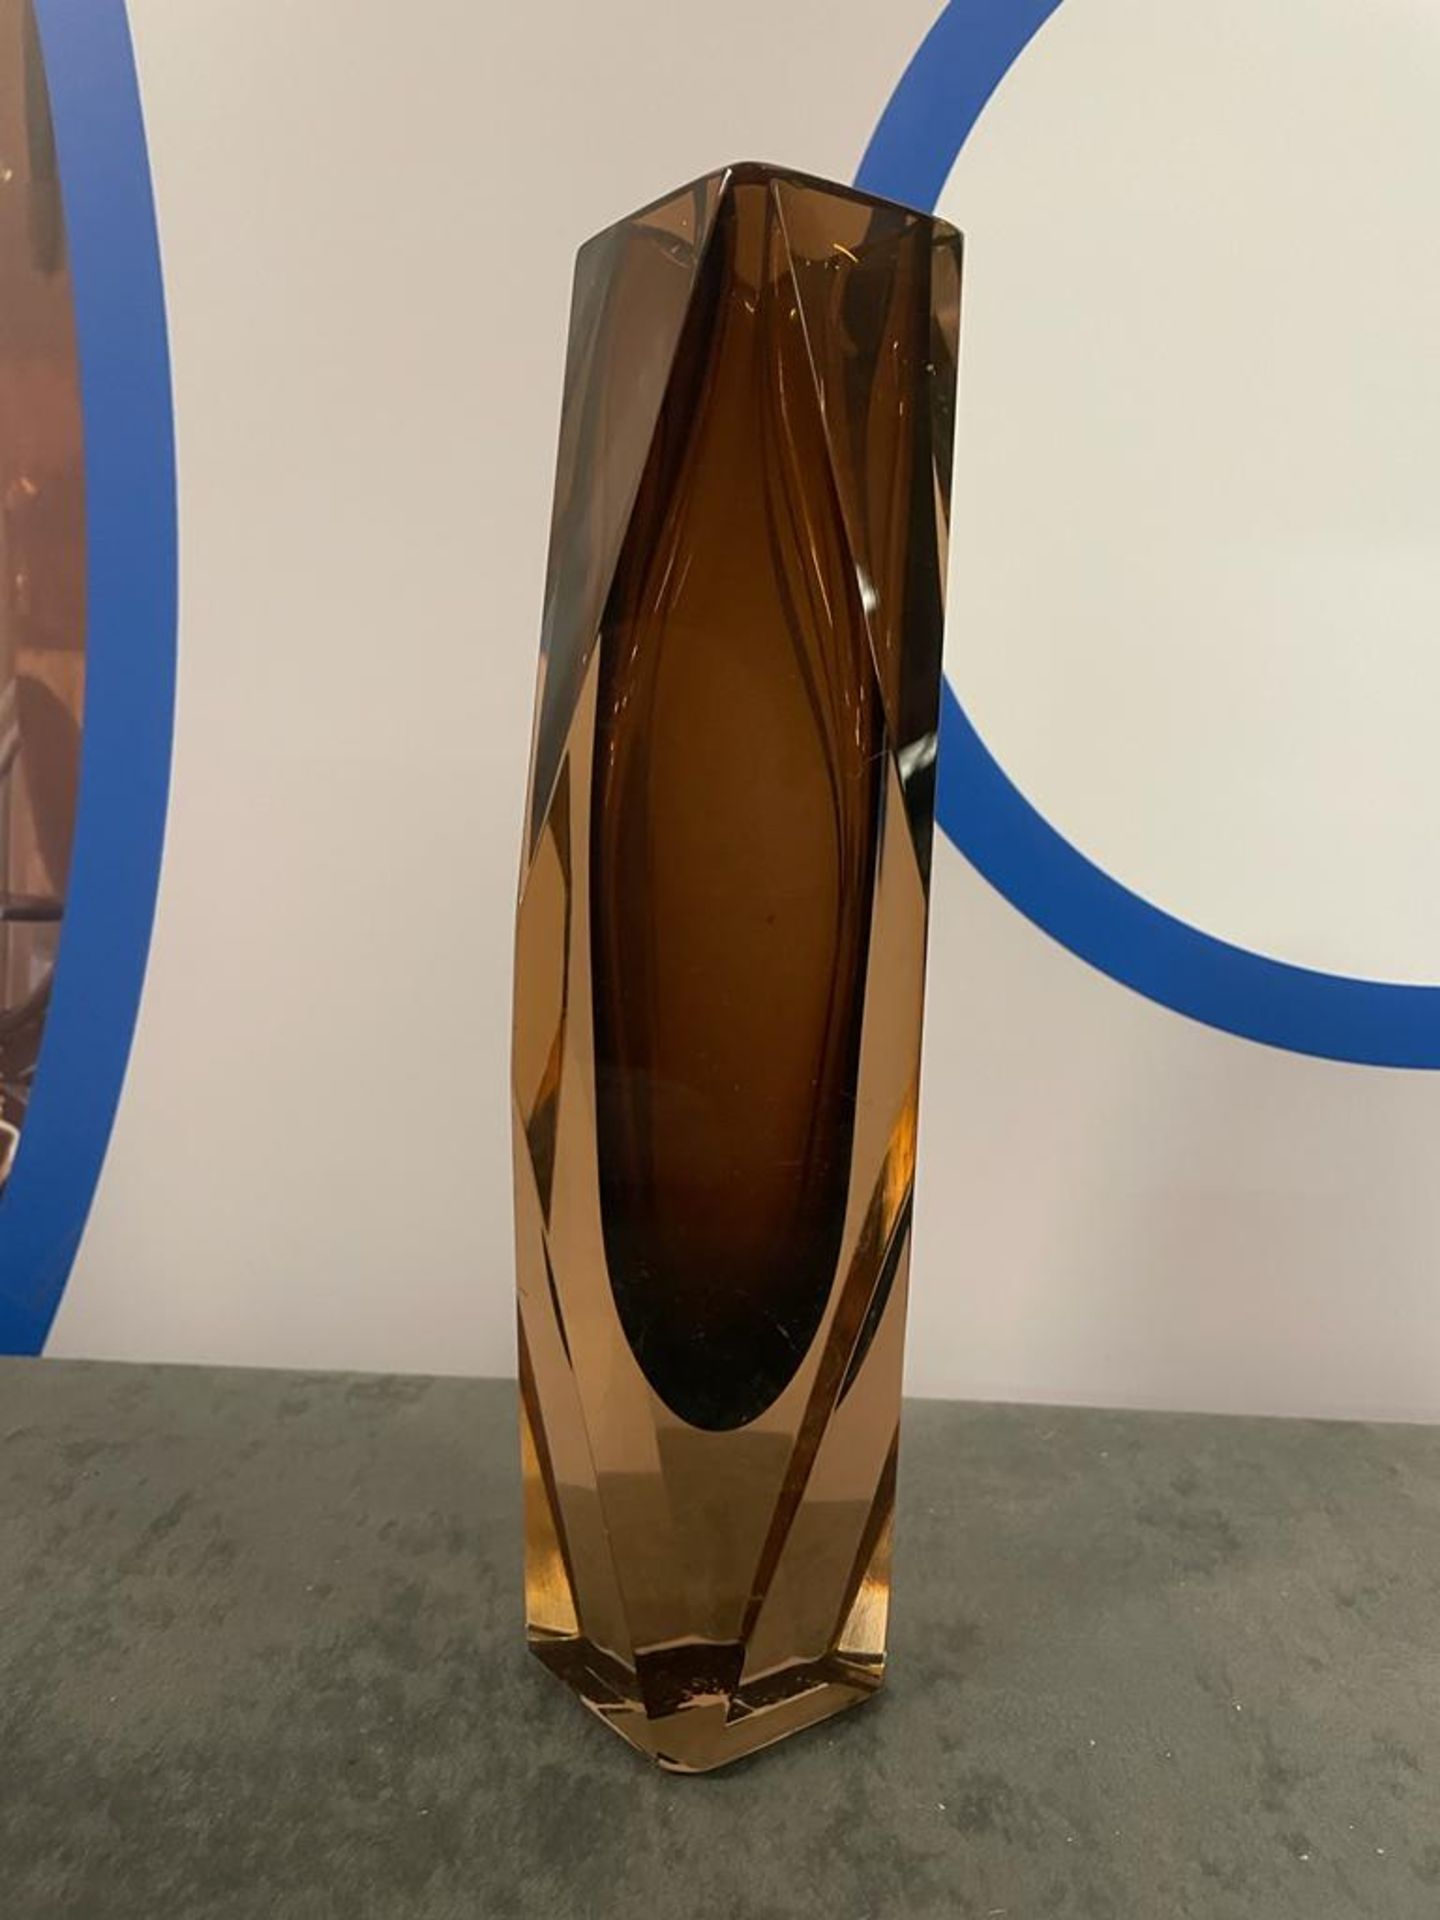 A Textured Brown Glass Vase 31 Cm High ( CP1272)